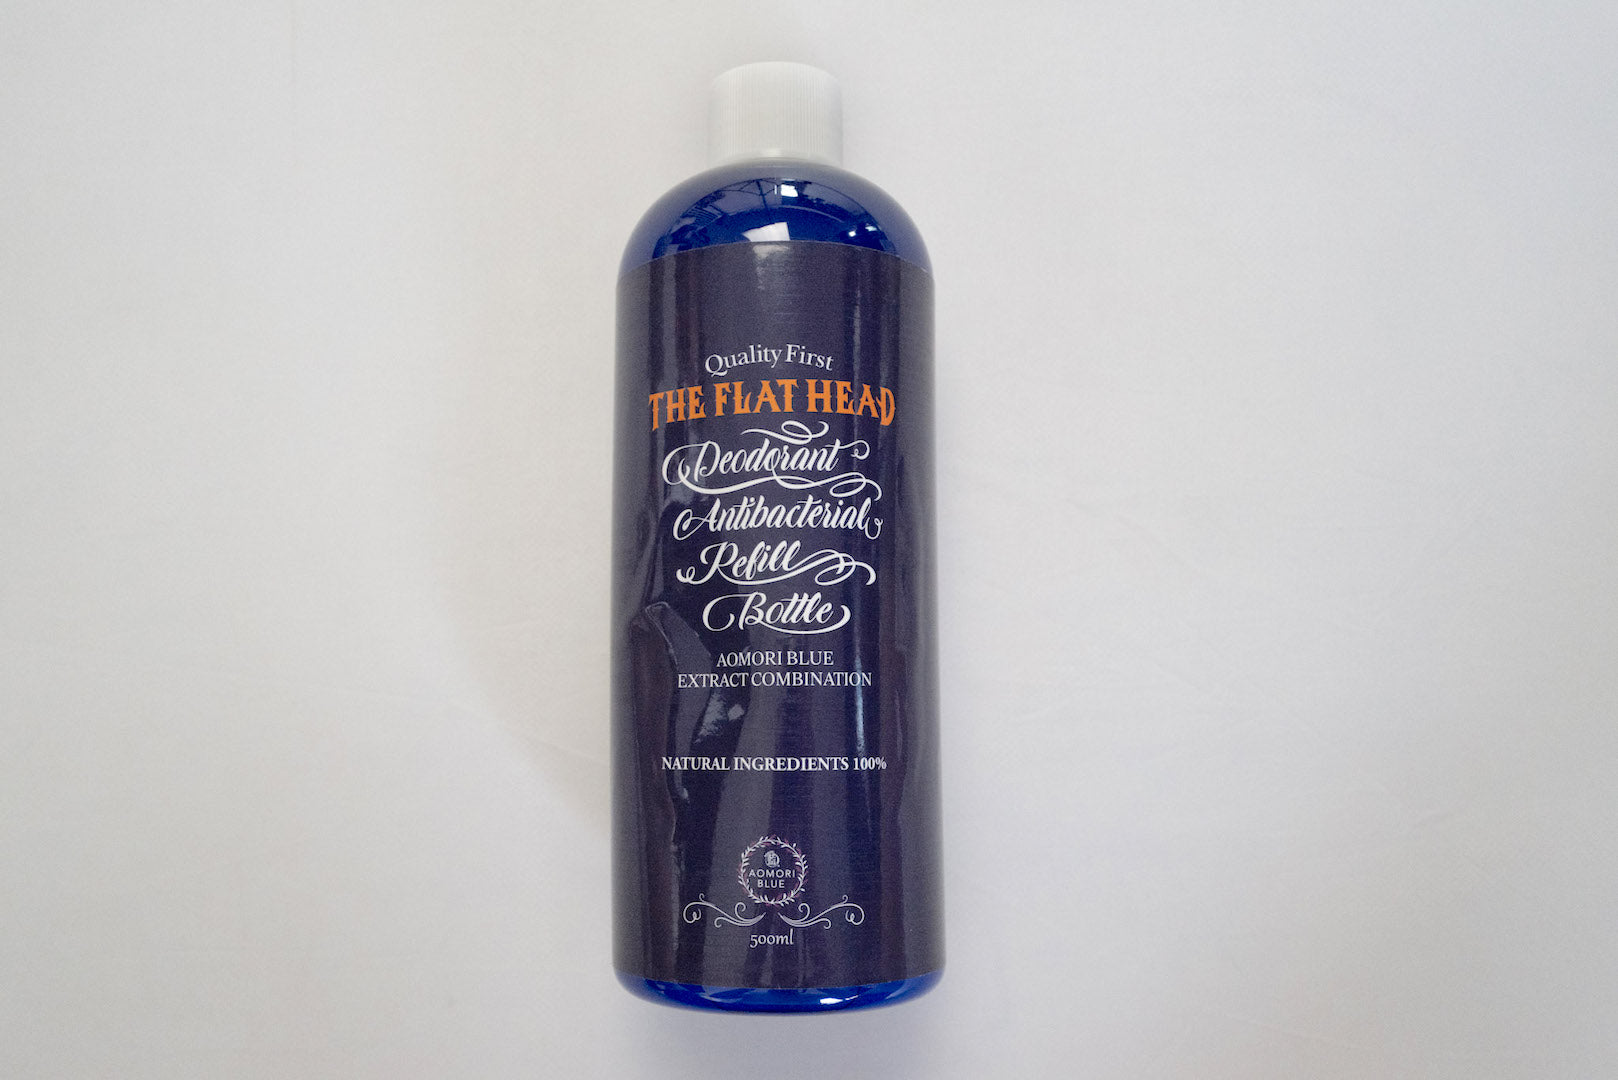 The Flat Head Natural Indigo Deodorant Anti-Bacterial Re-fill